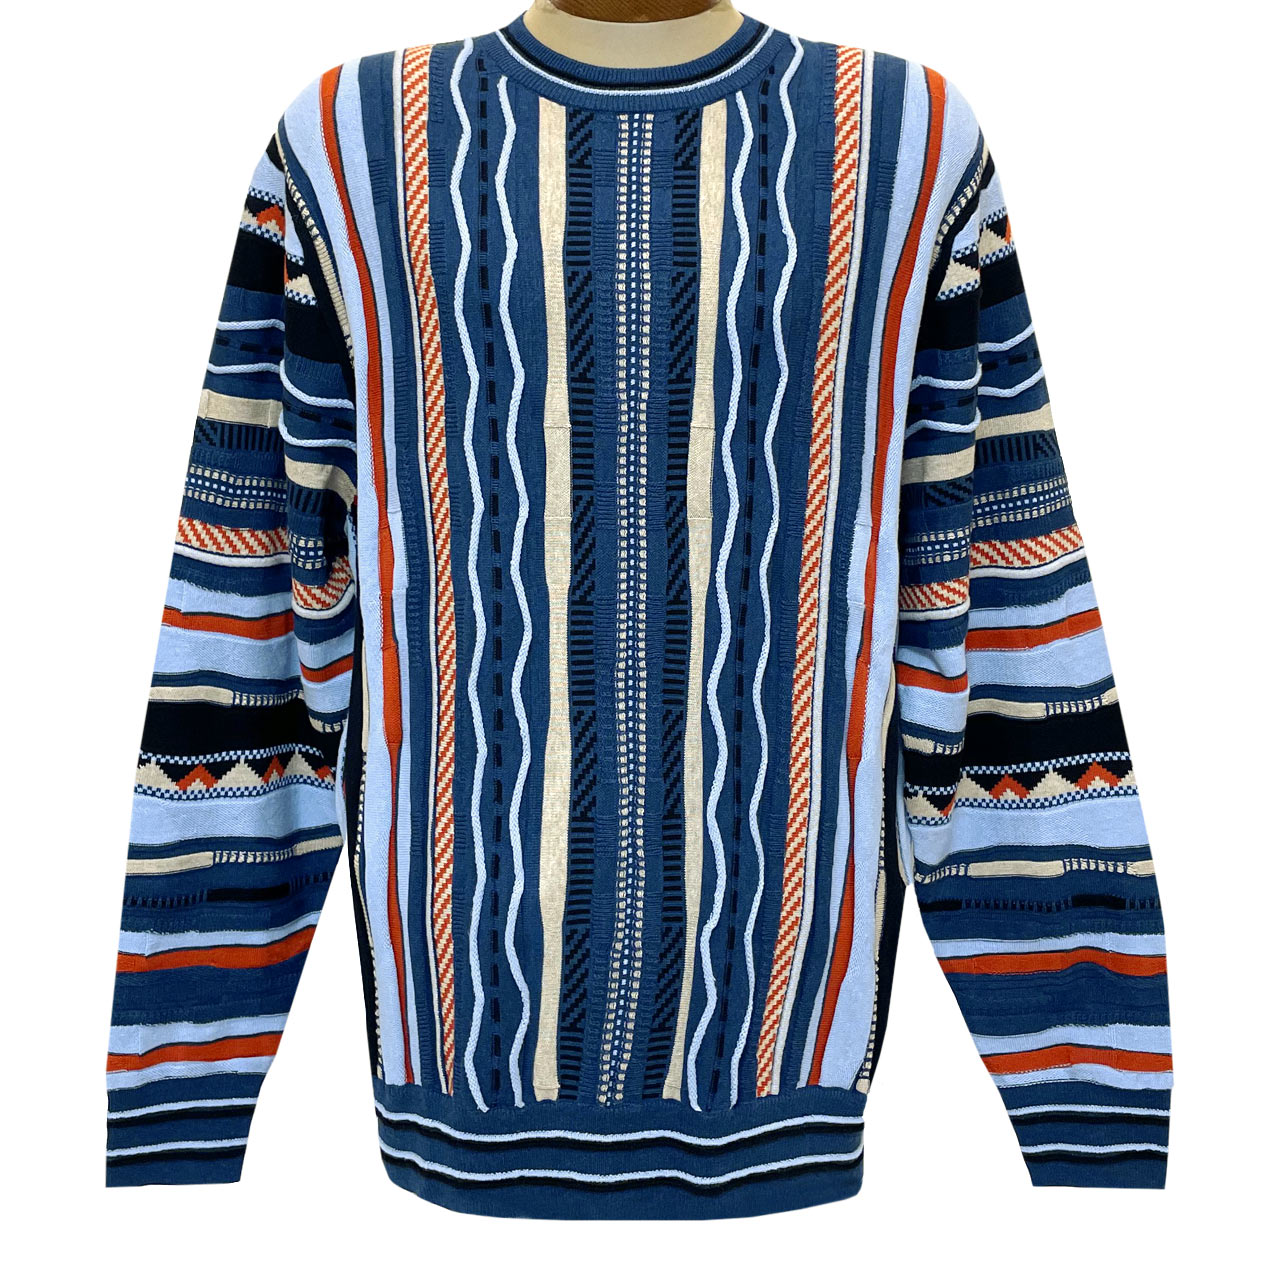 Men's F/X Fusion Vertical Multi Stitch Textured Novelty Crew Neck Sweater #5014 Cobalt